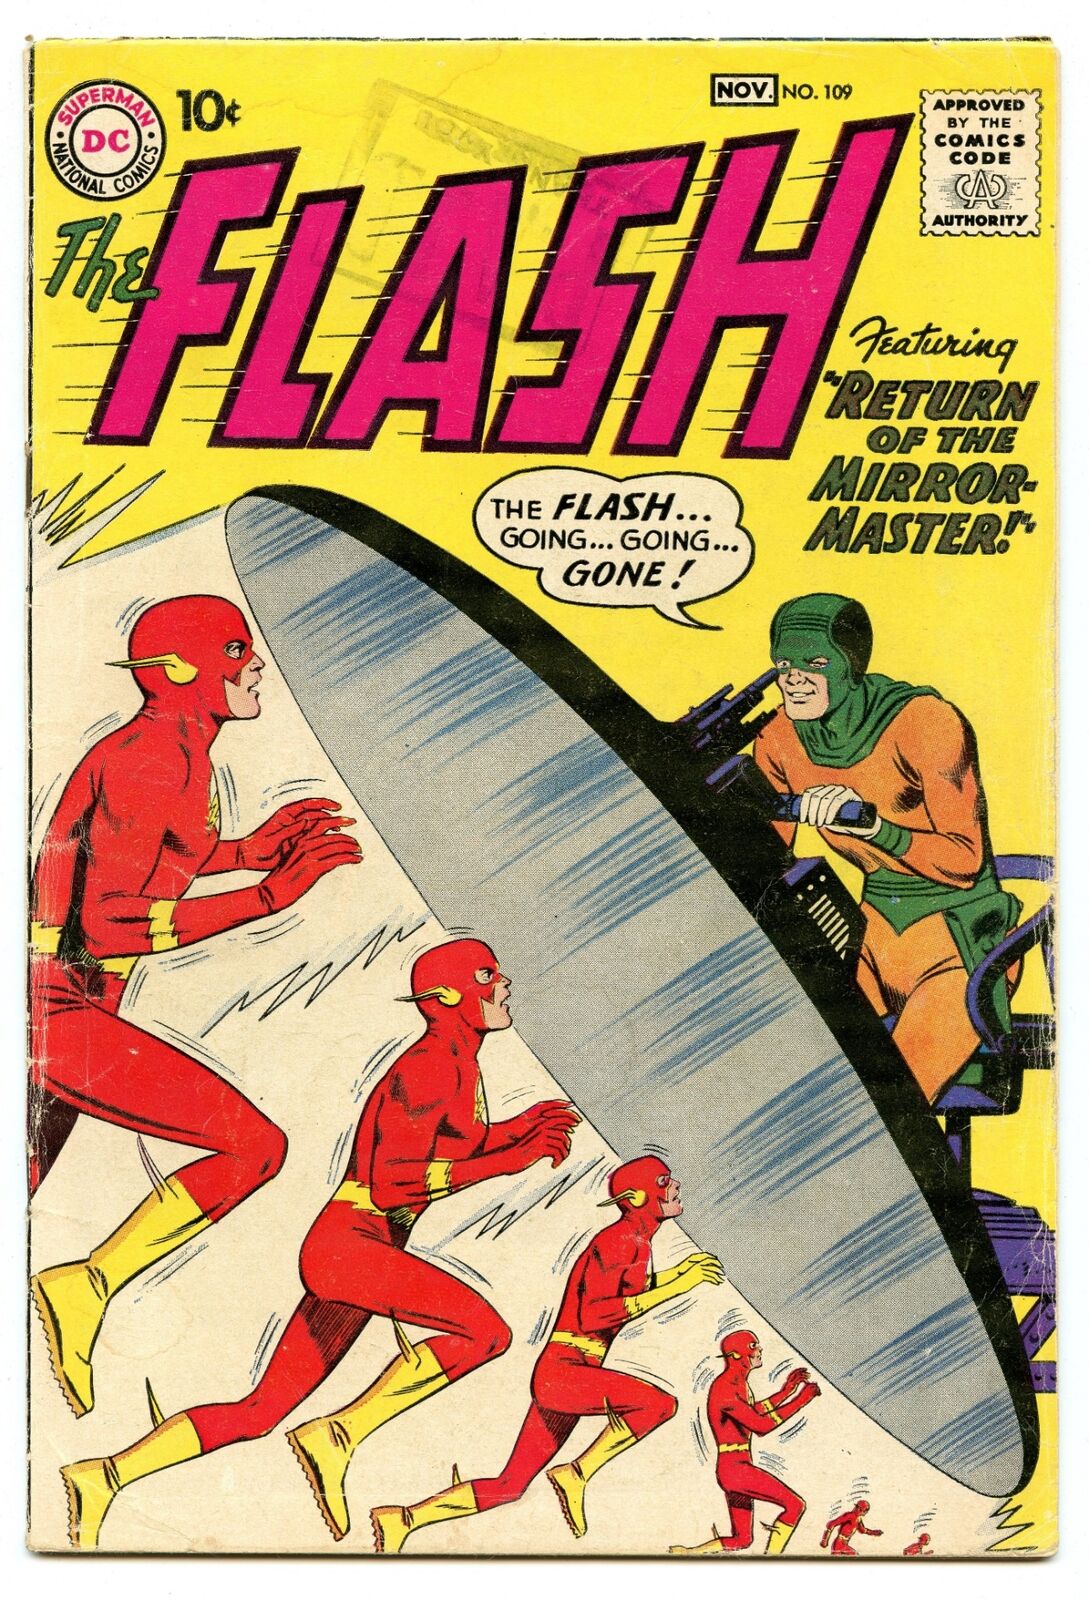 Flash 109 (Nov 1959) VG (4.0)